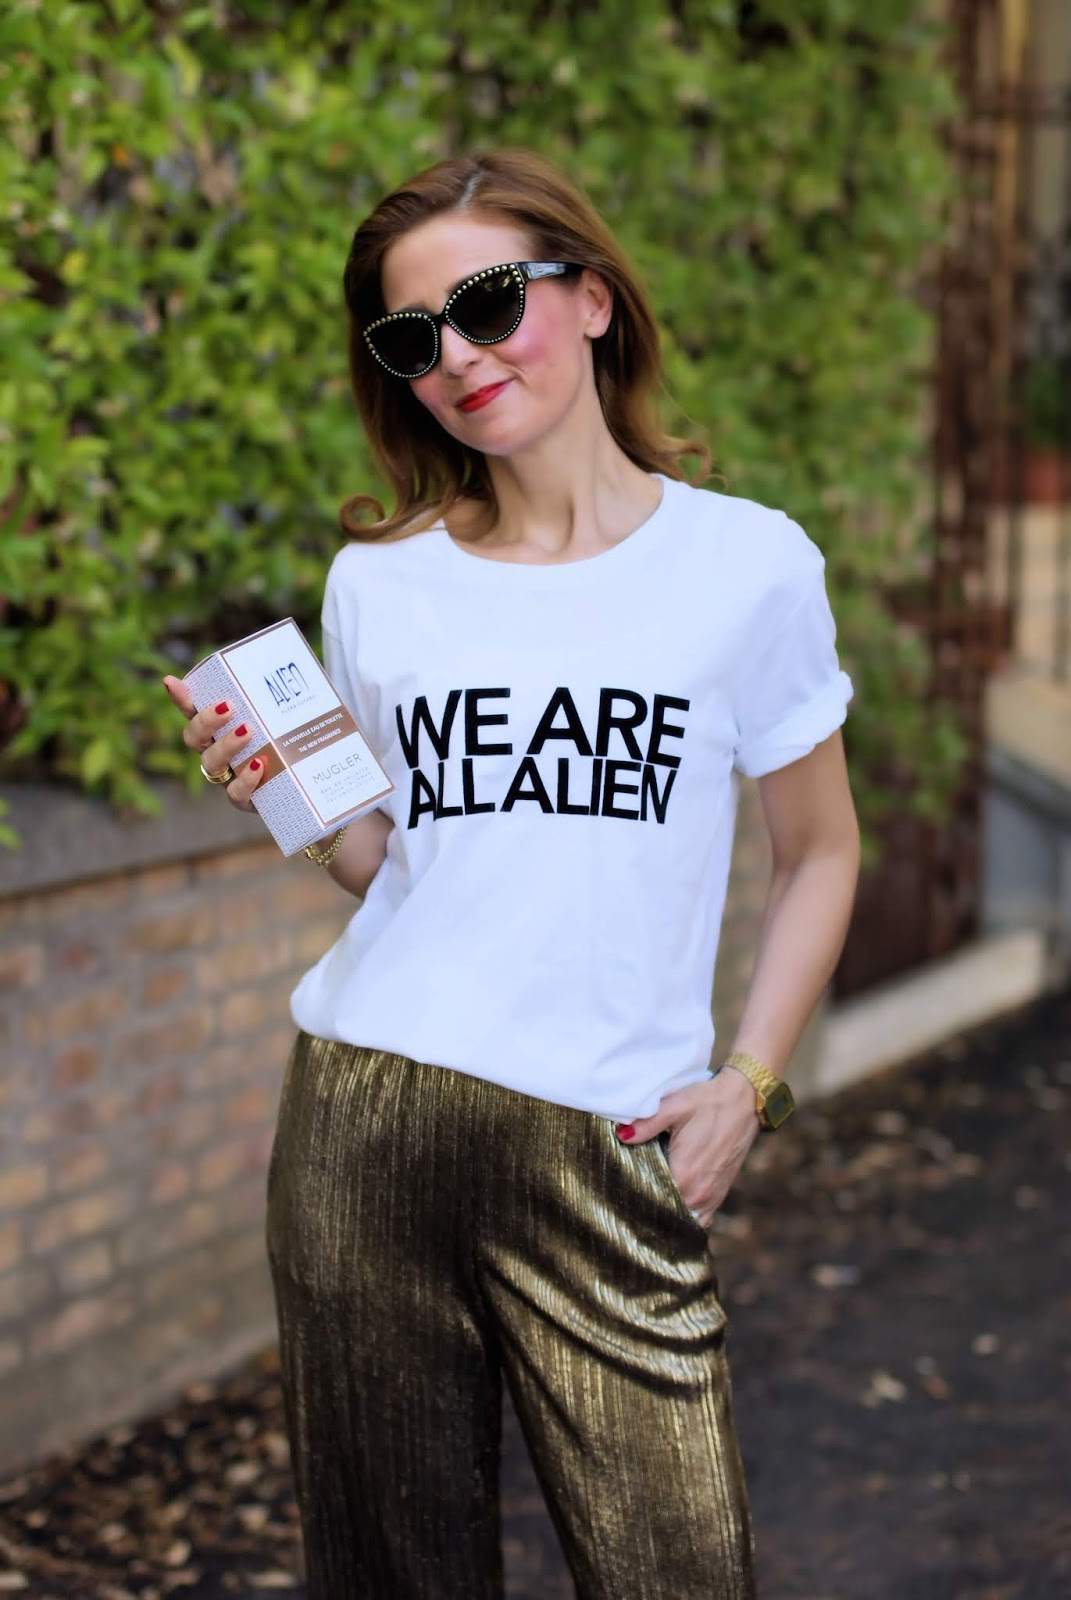 ALIEN FLORA FUTURA, la nuova Eau de Toilette Mugler su Fashion and Cookies beauty blog, beauty blogger